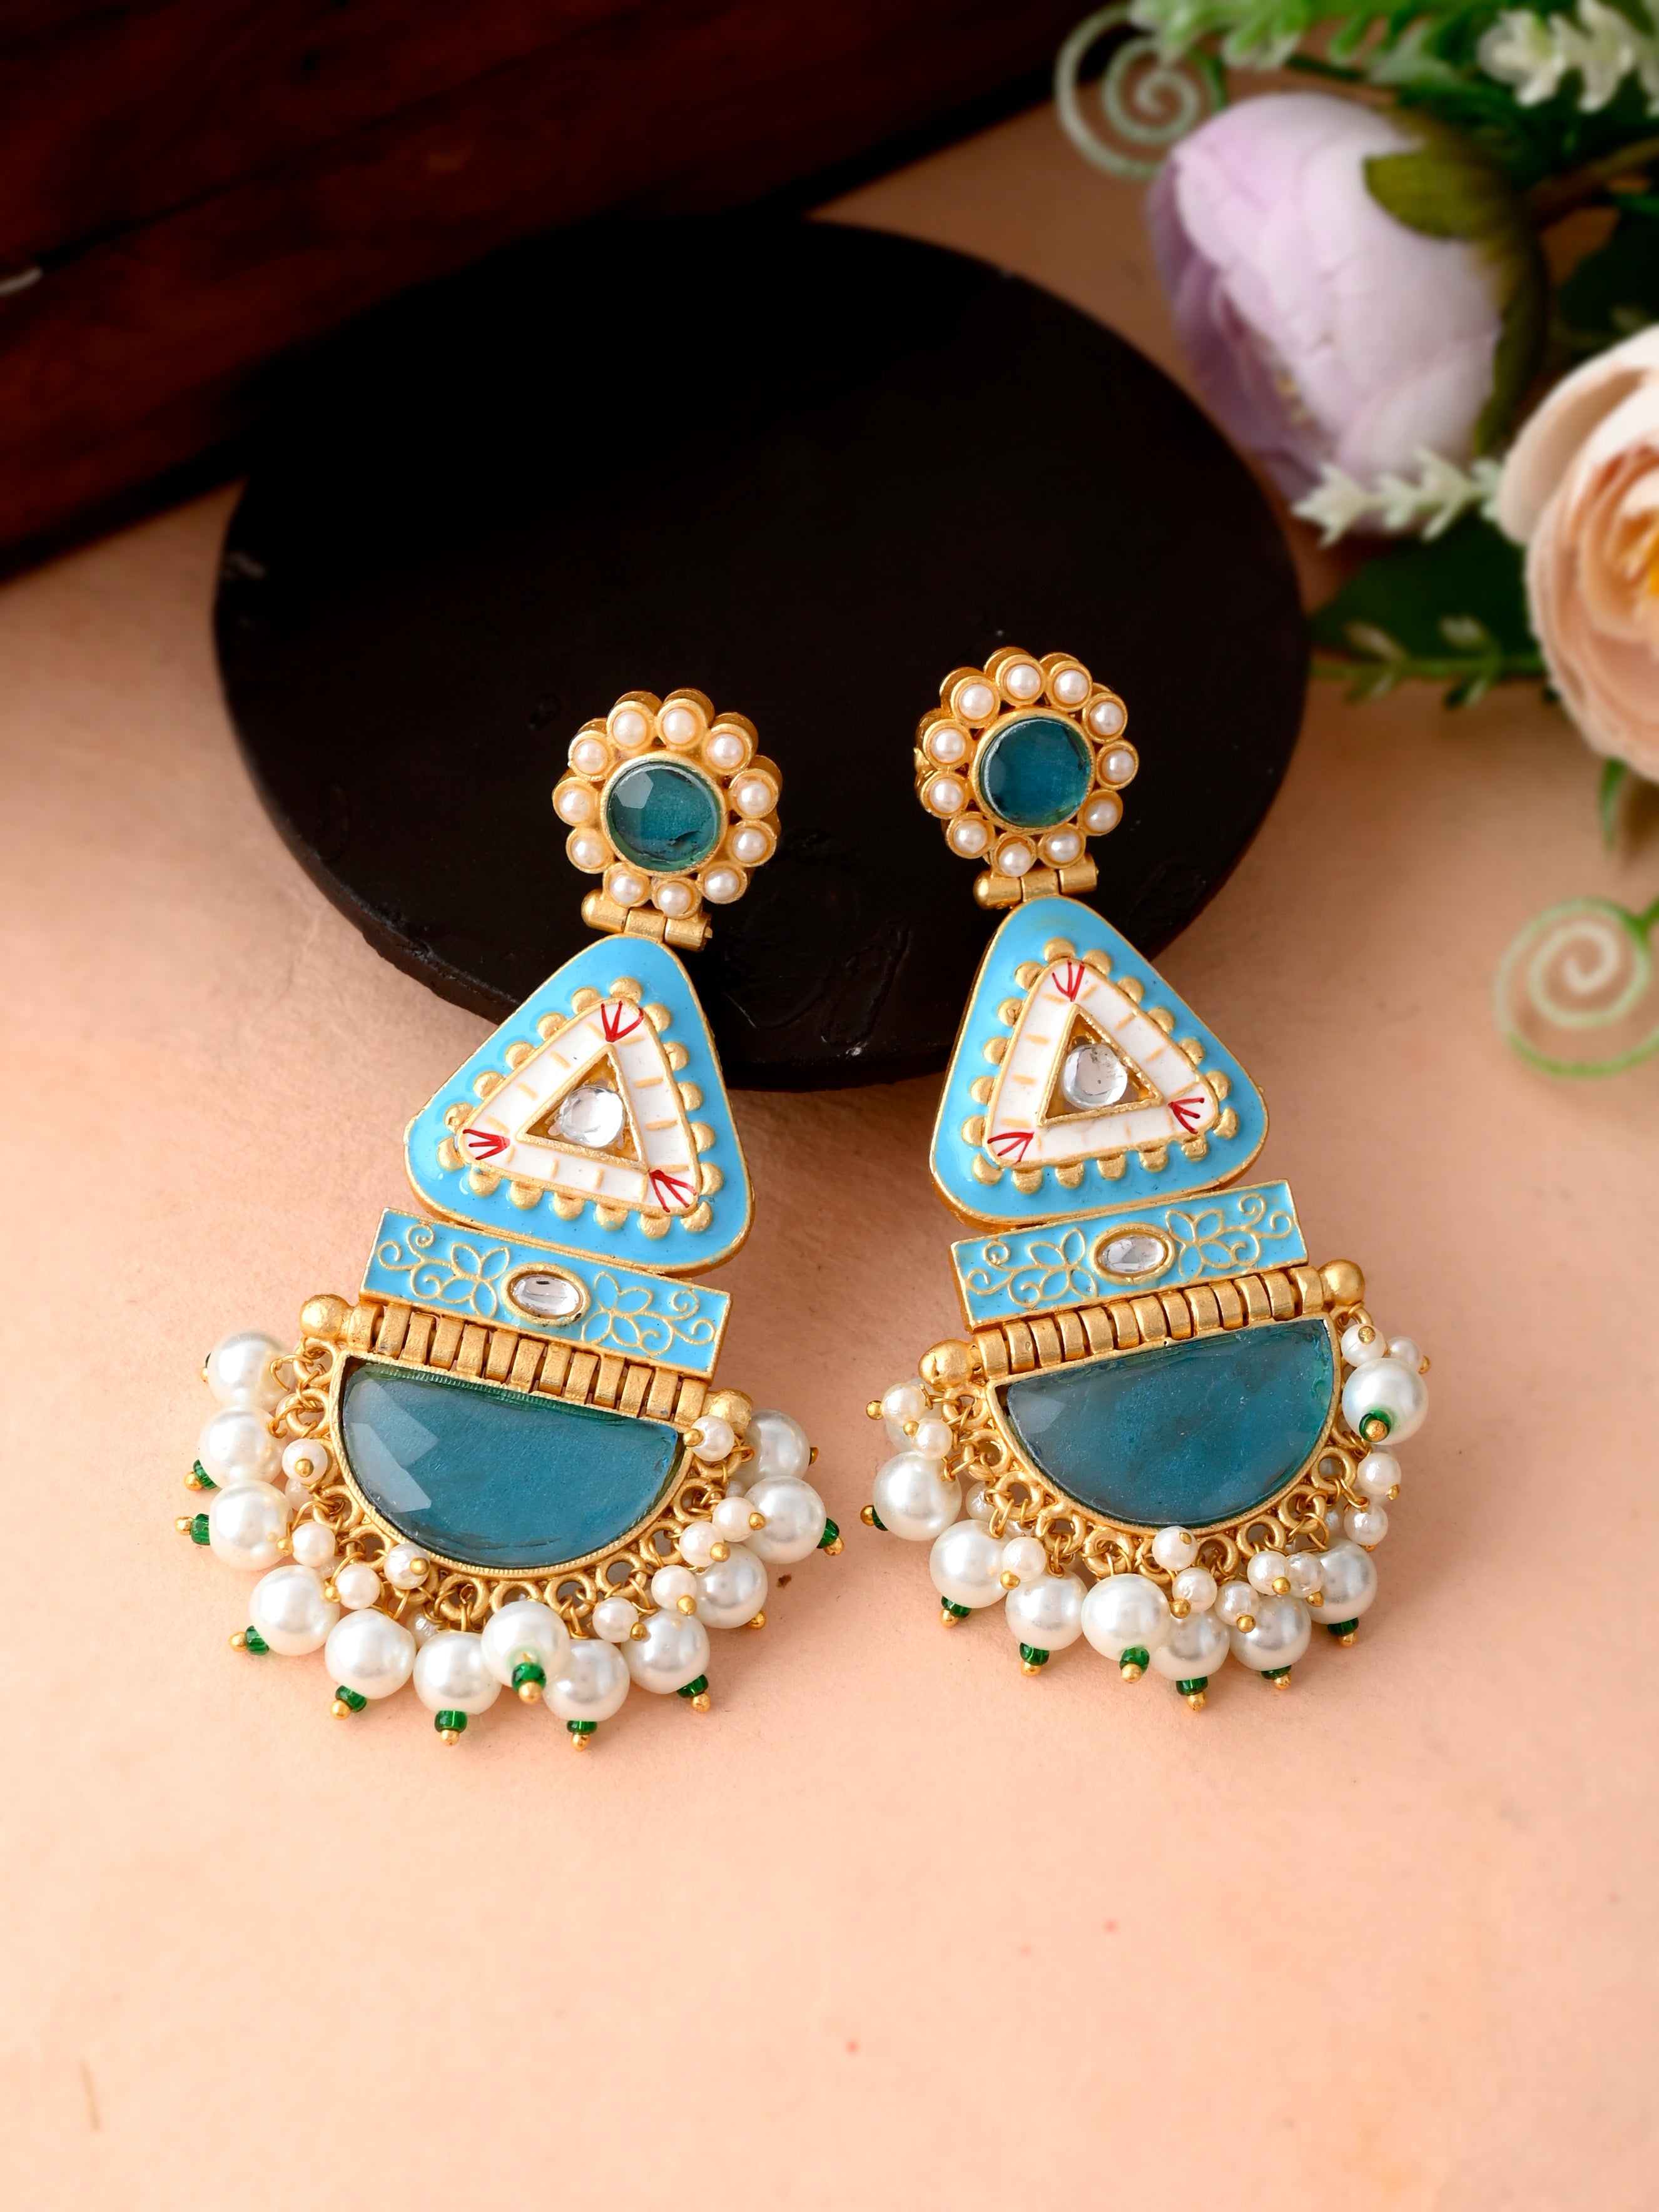 Details more than 218 golden colour earrings super hot